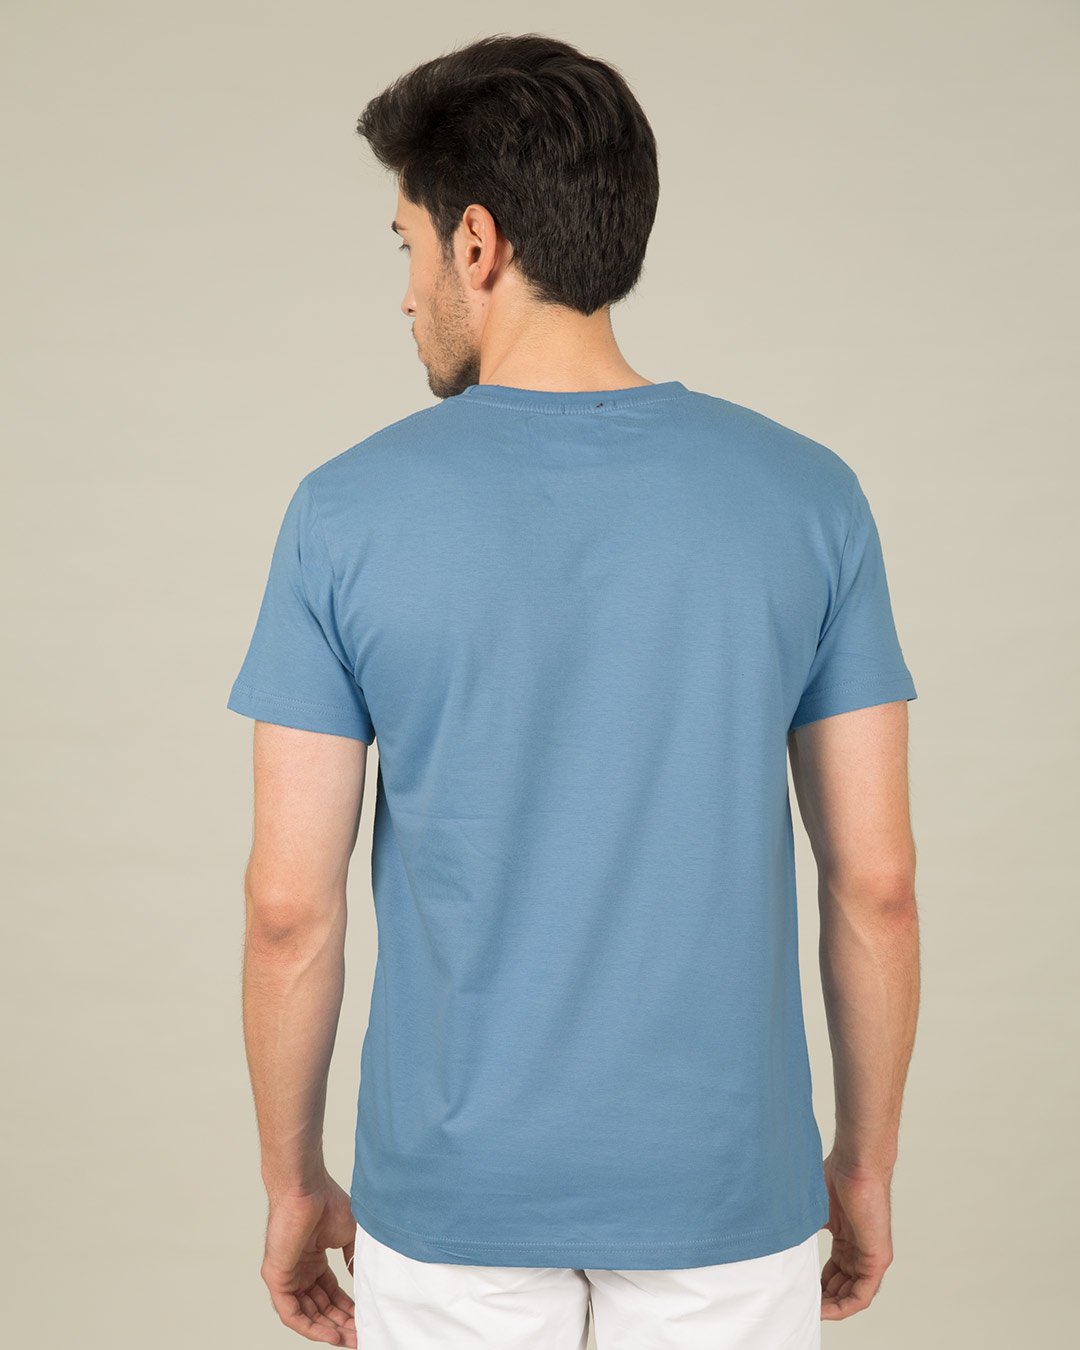 island-blue-half-sleeve-t-shirt-men-s-plain-t-shirts-209191-1560418319 for him Island Blue